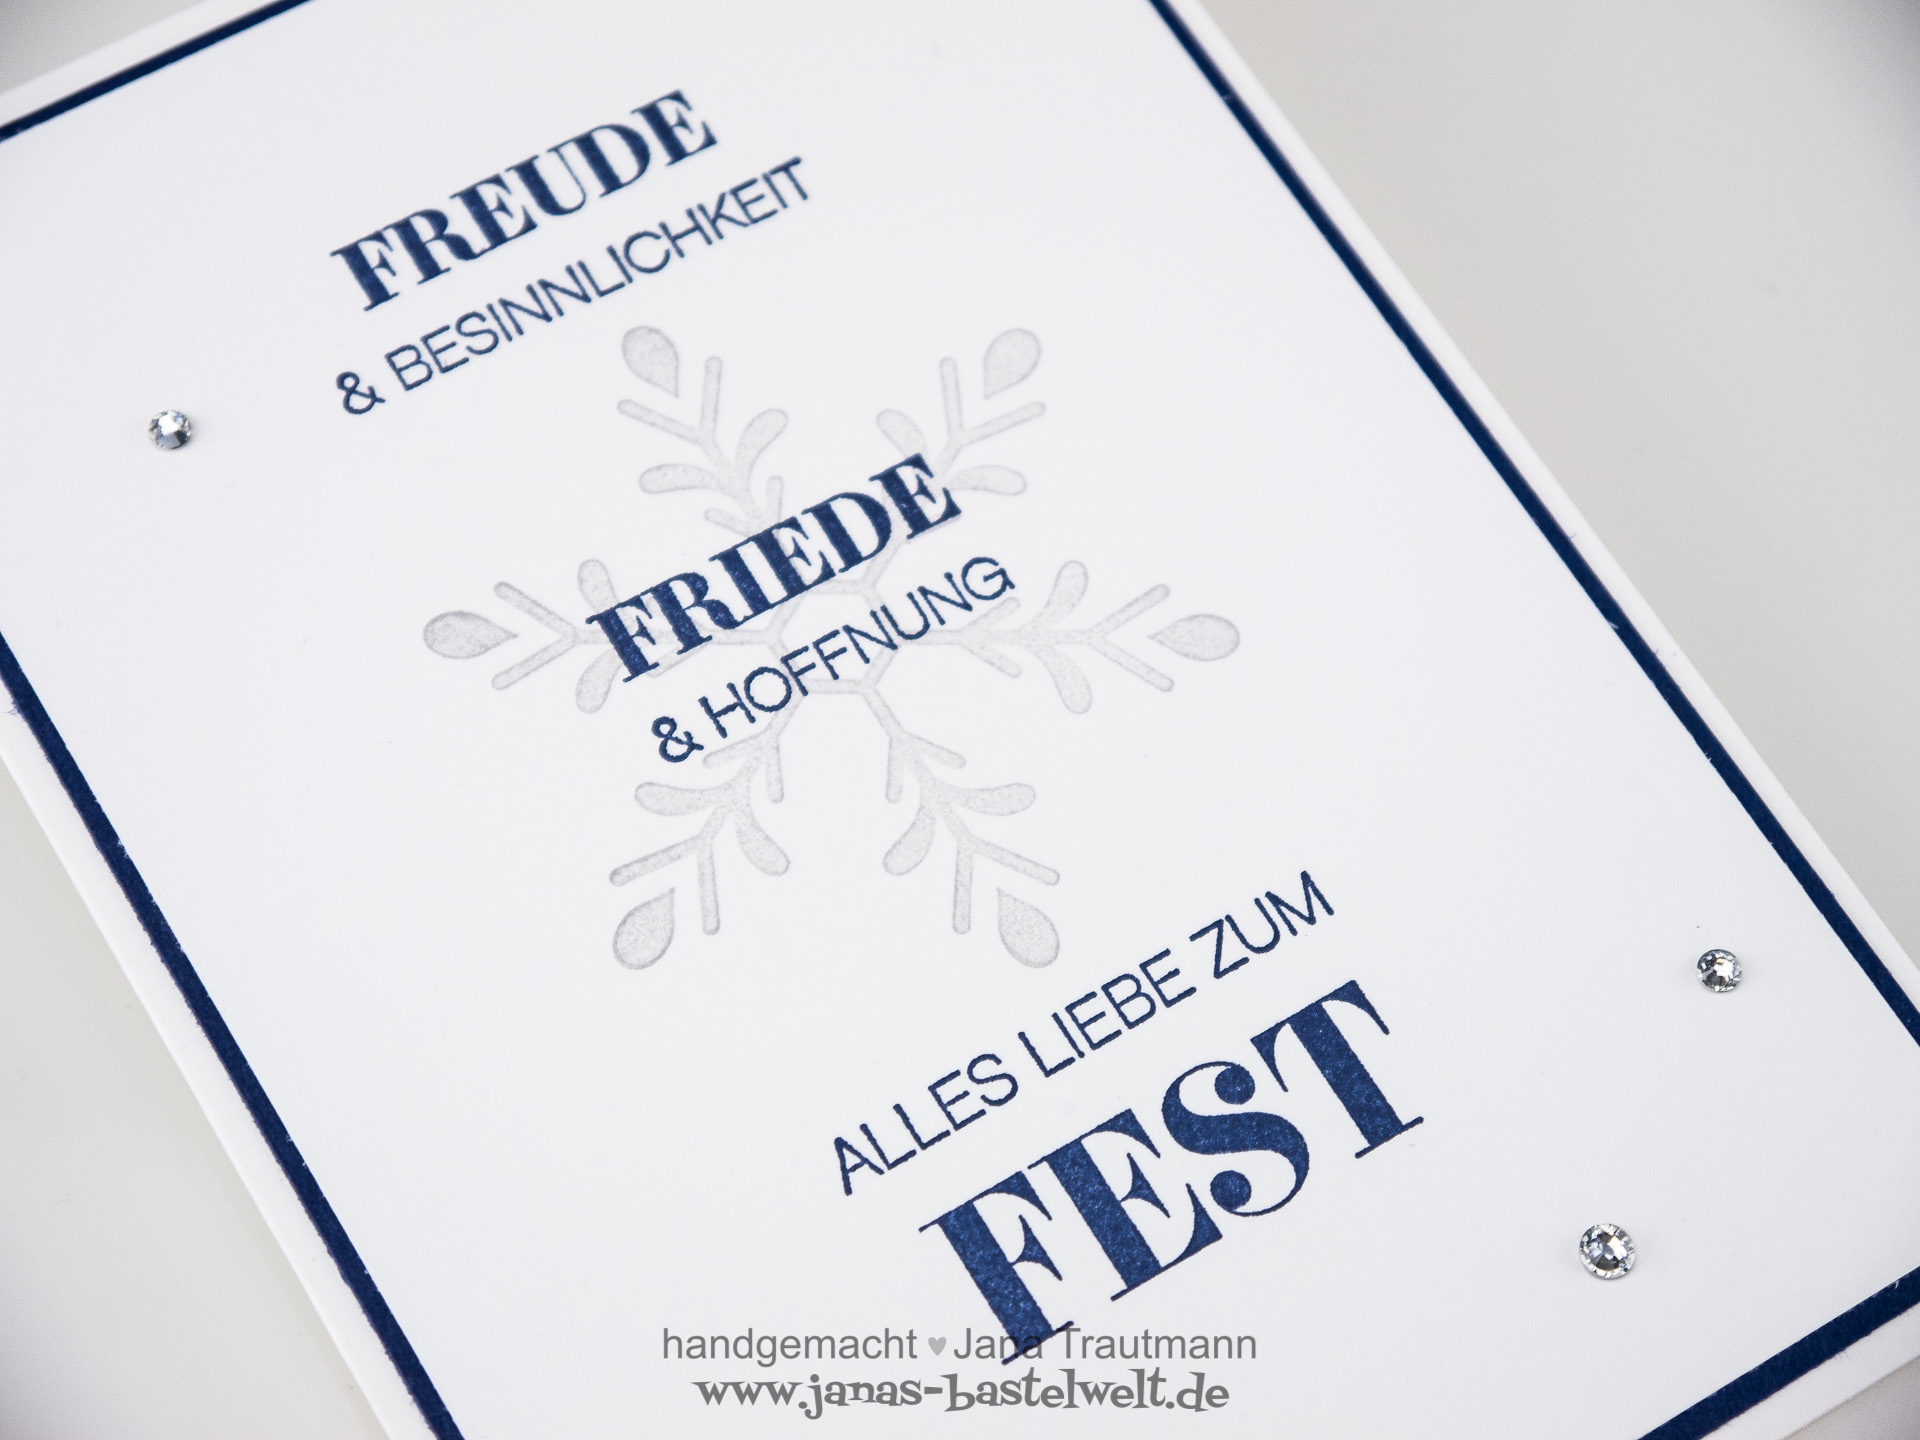 Freude Friede Fest 2 2016